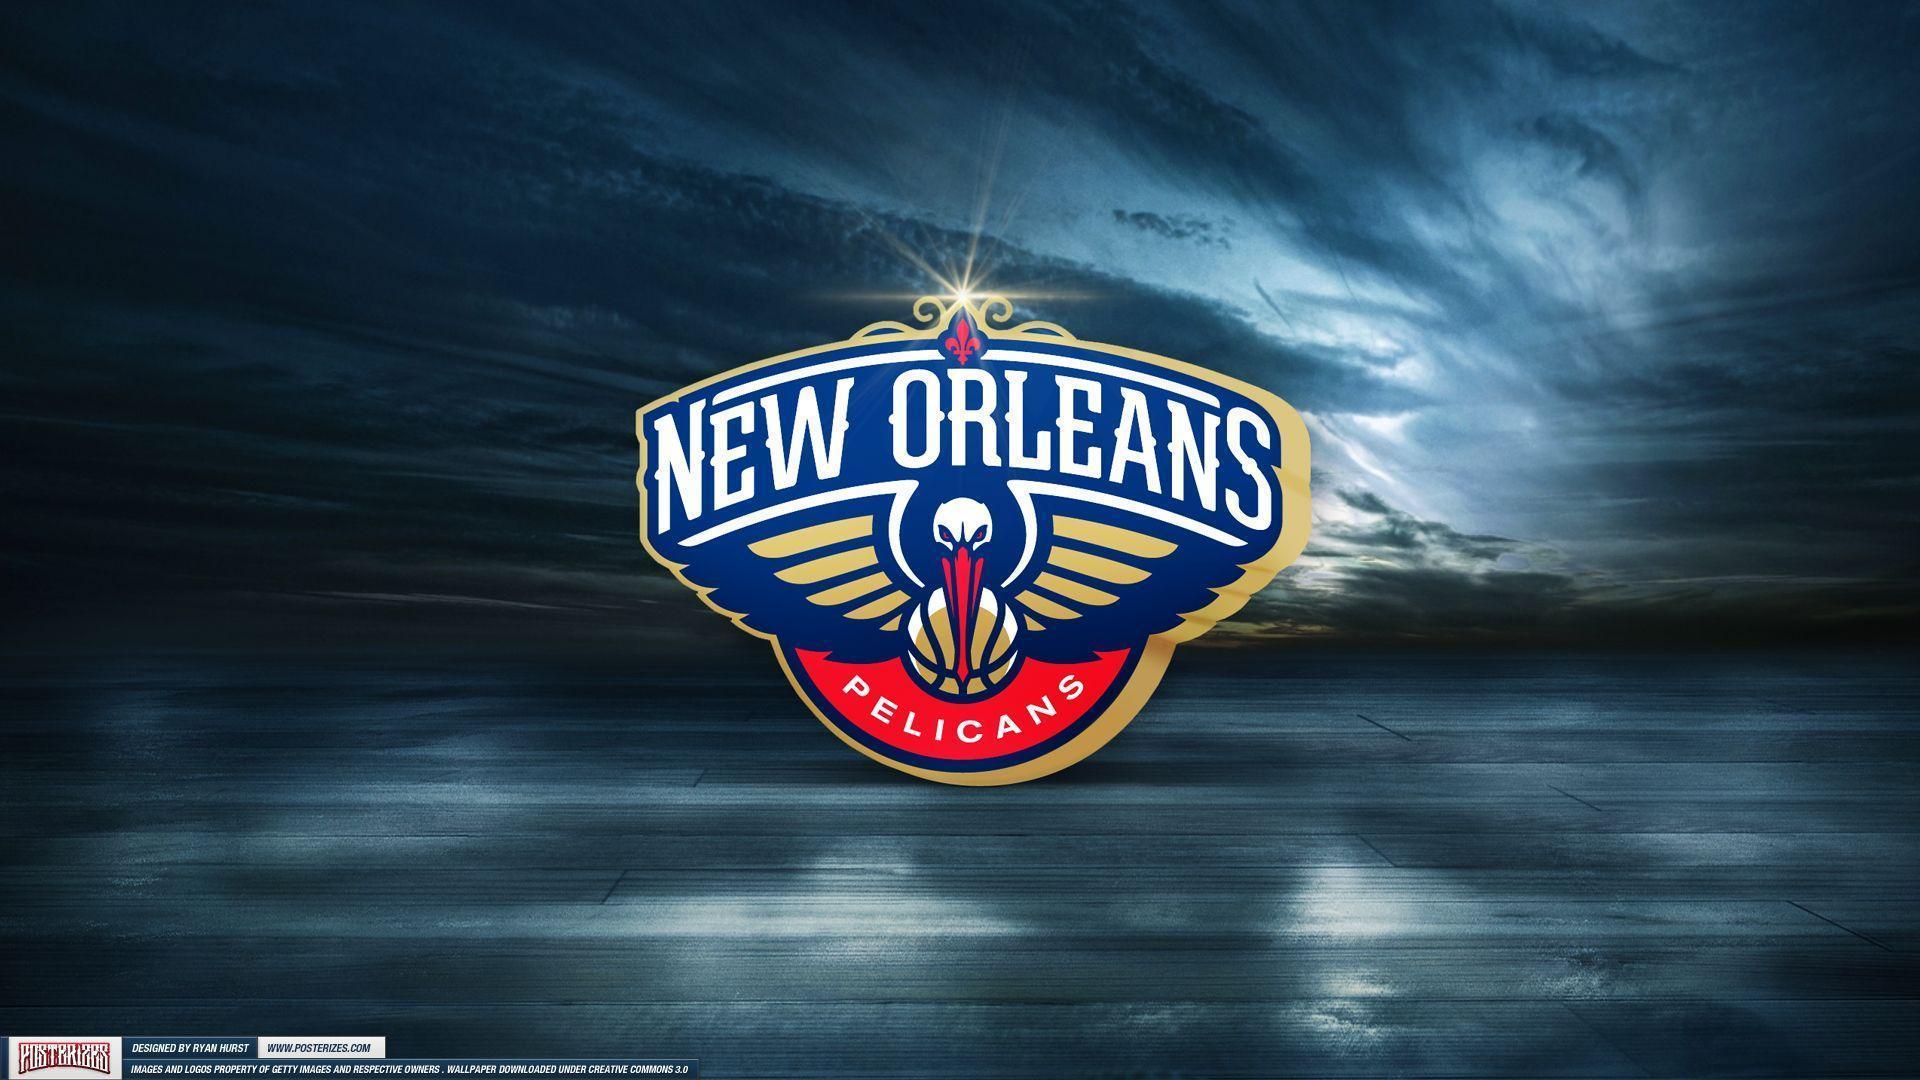 New Orleans Pelicans Wallpaper. New Orleans Hornets Pelicans